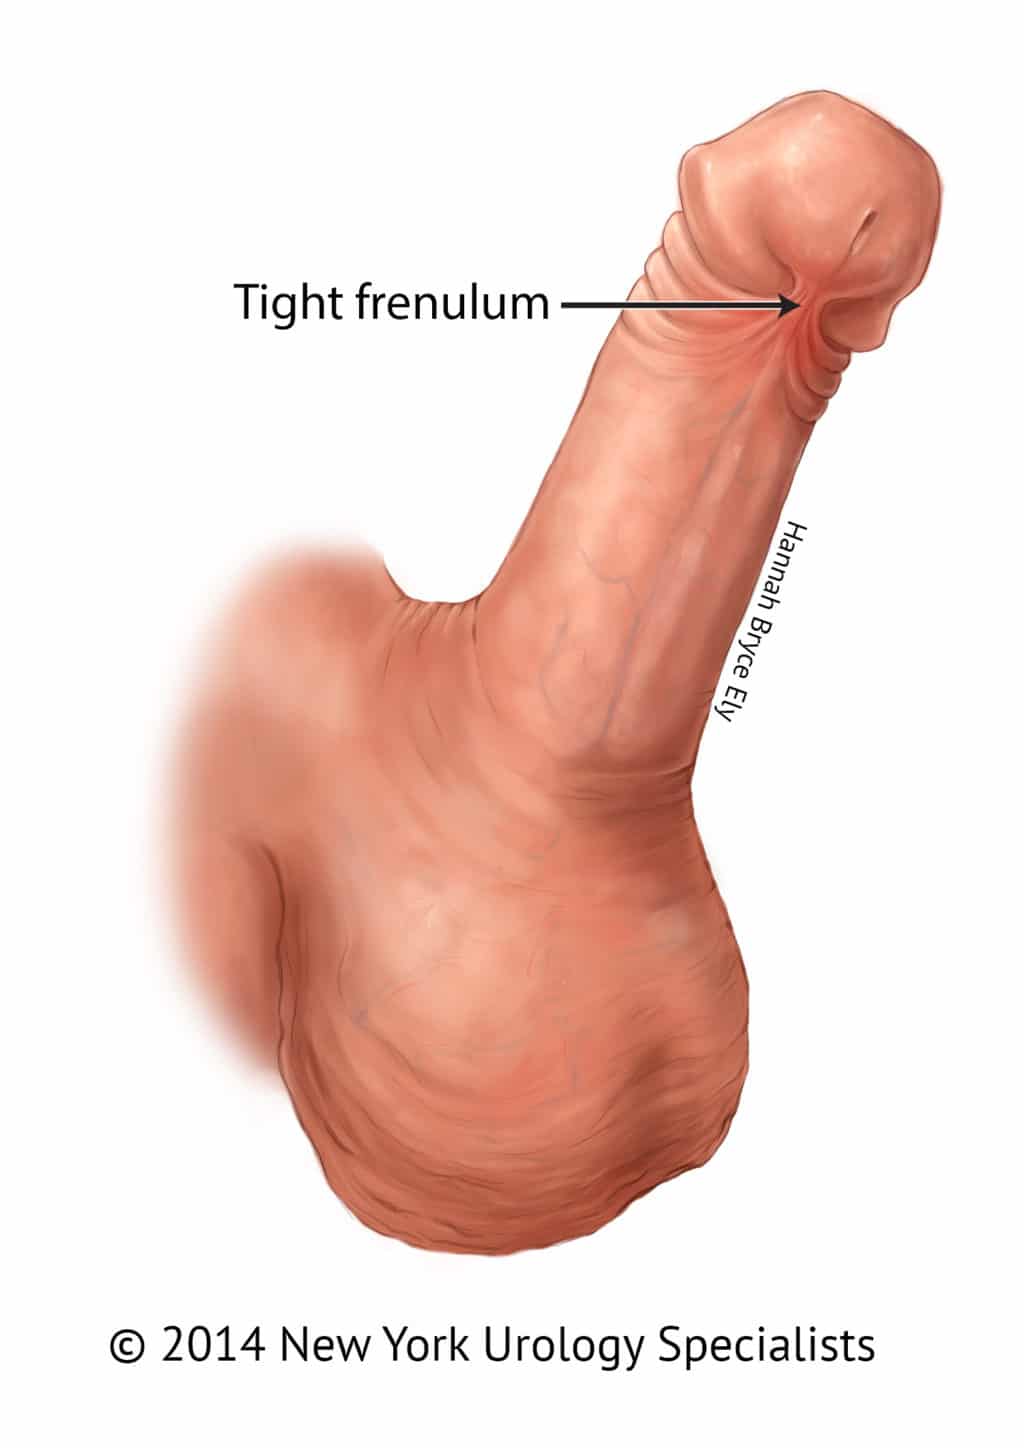 Sex With A Circumcised Penis 36